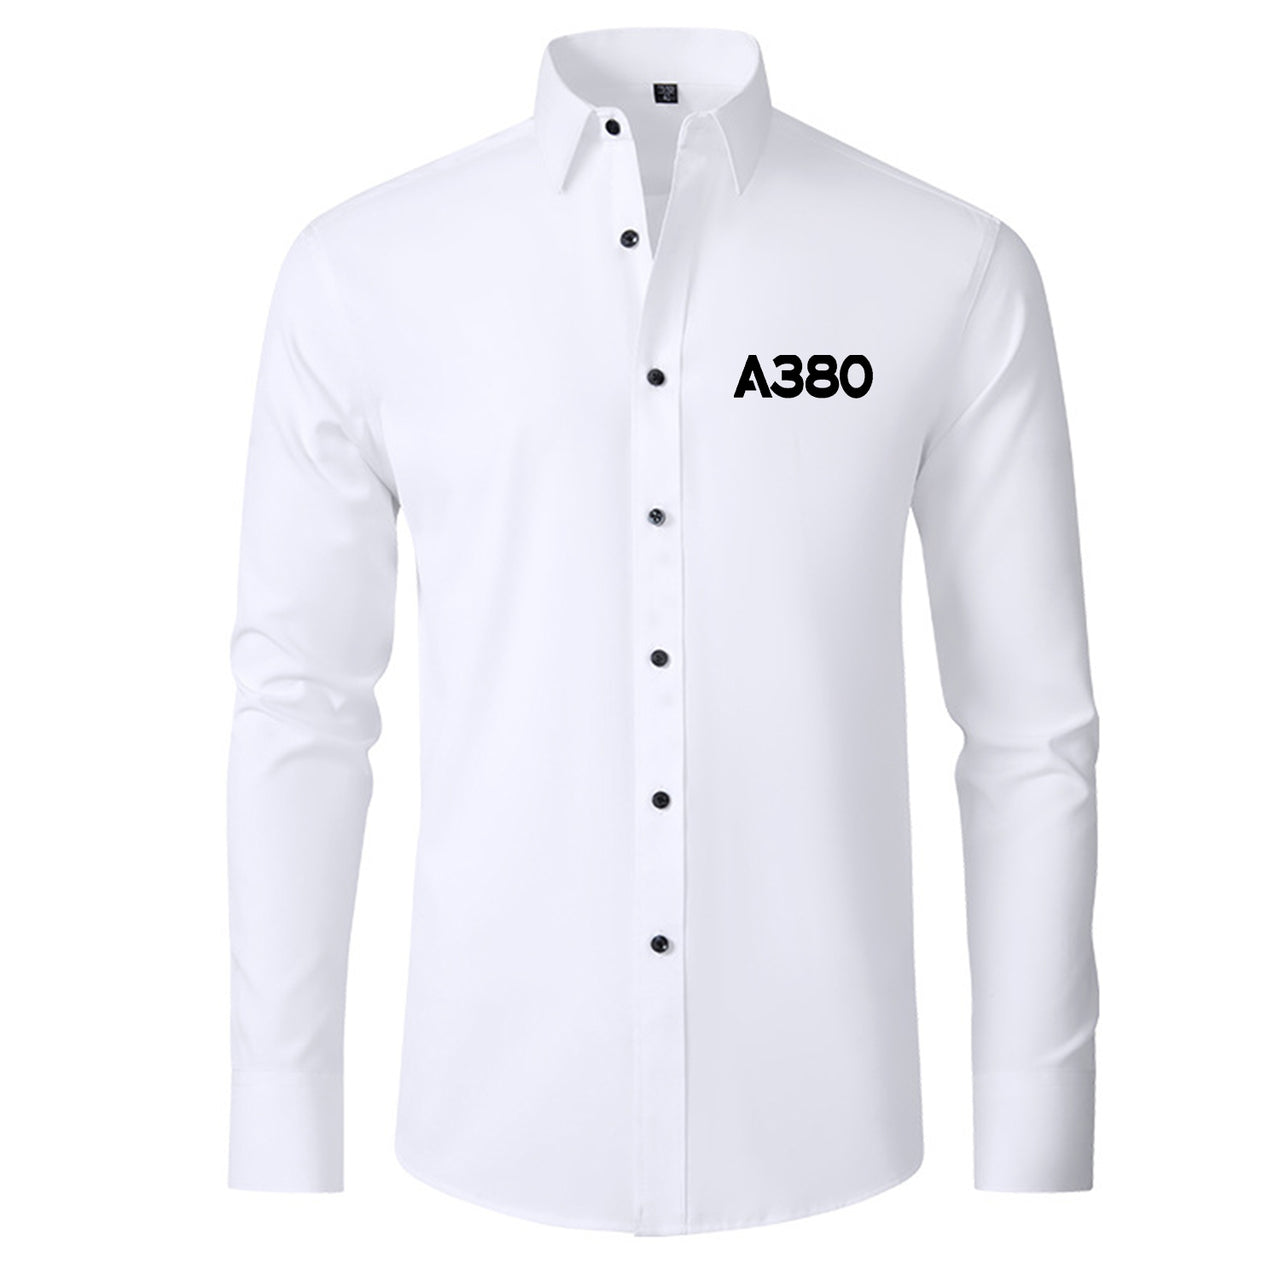 A380 Flat Text Designed Long Sleeve Shirts